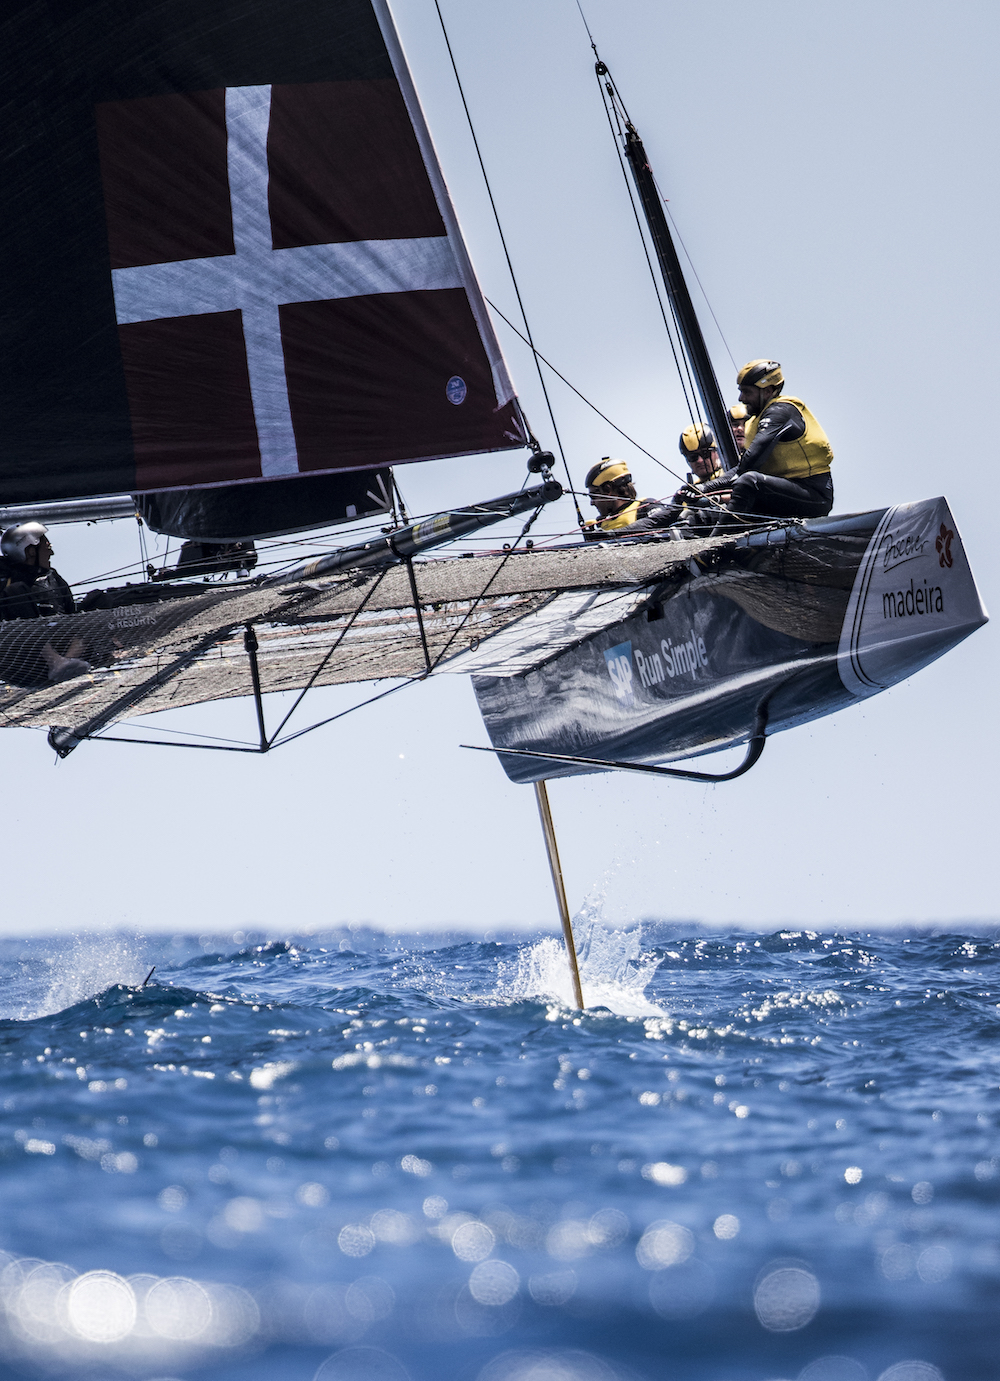  GC32Catamaran, Flying Phantom  Extreme Sailing Series, Act 3  Madeira POR  Final results